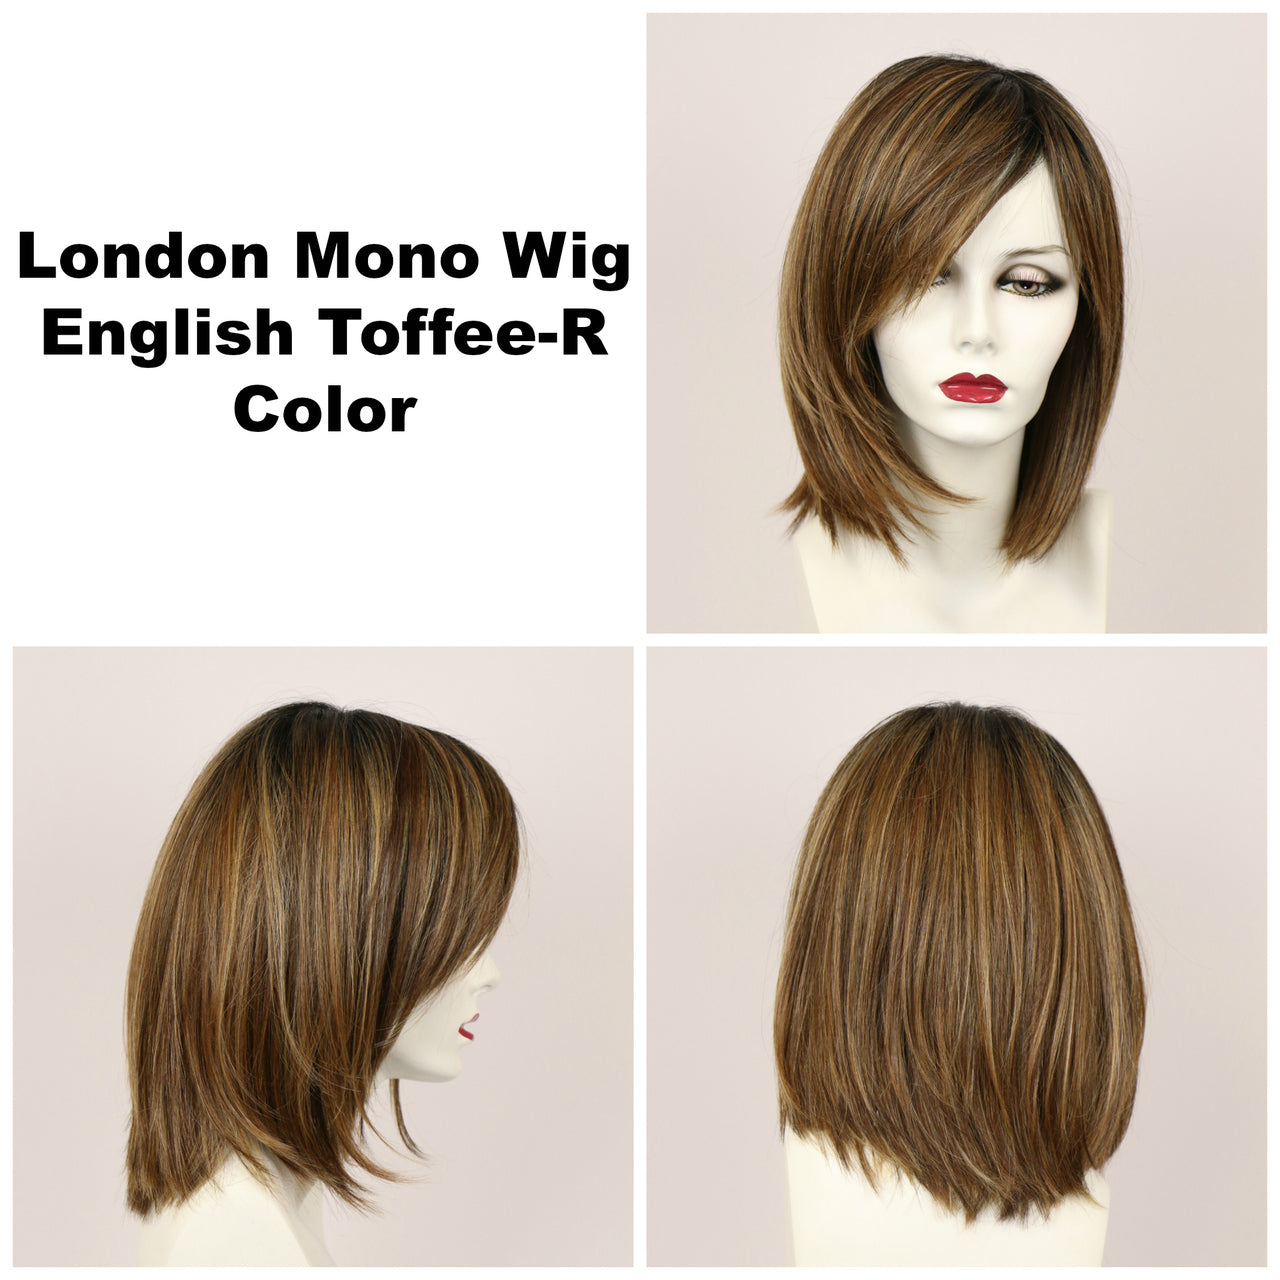 English Toffee-R / London Monofilament w/ Roots / Medium Wig